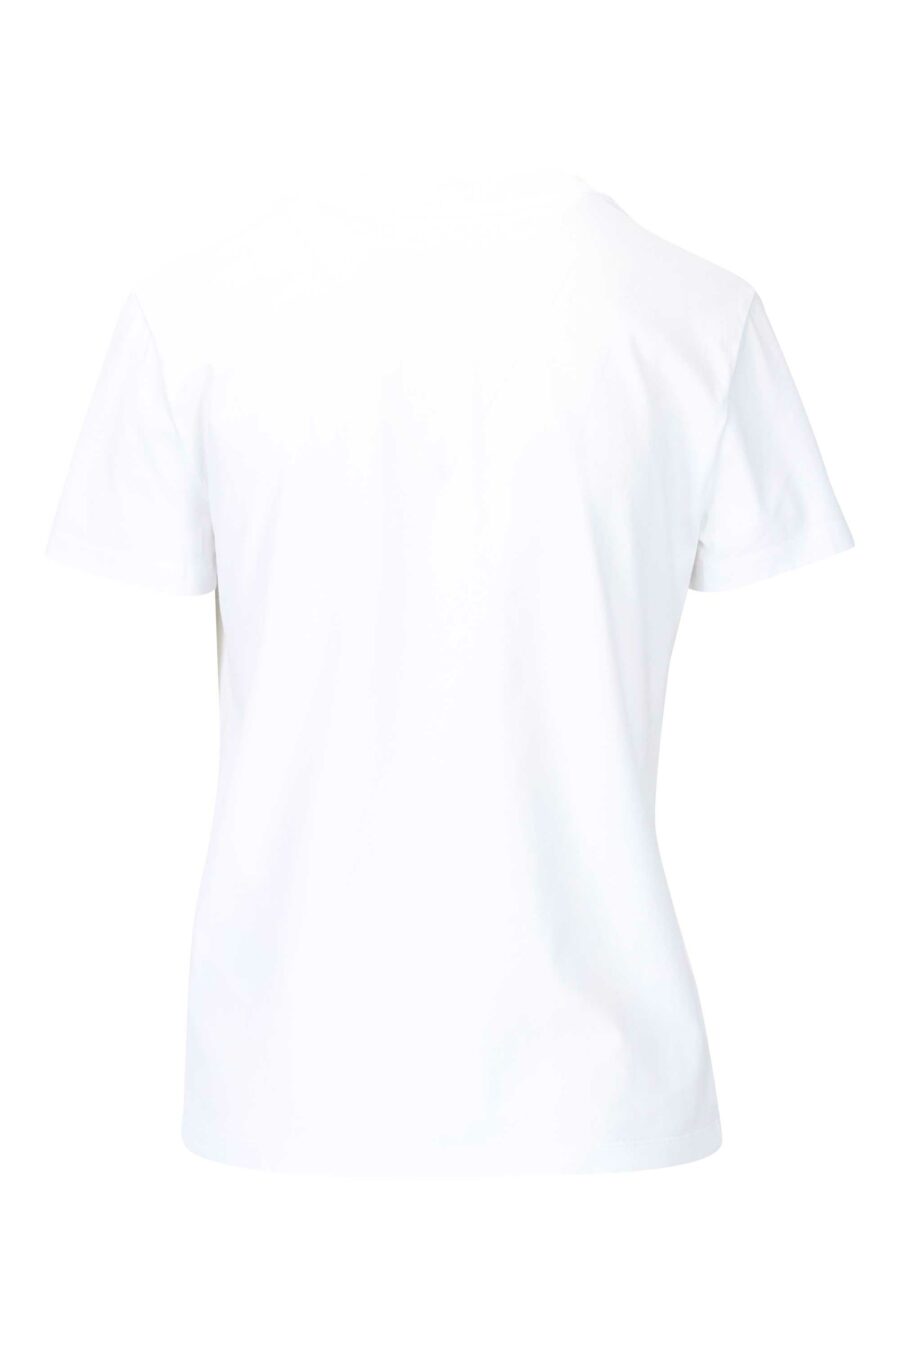 T-shirt branca com o logótipo "Kenzo Academy" - 3612230517073 1